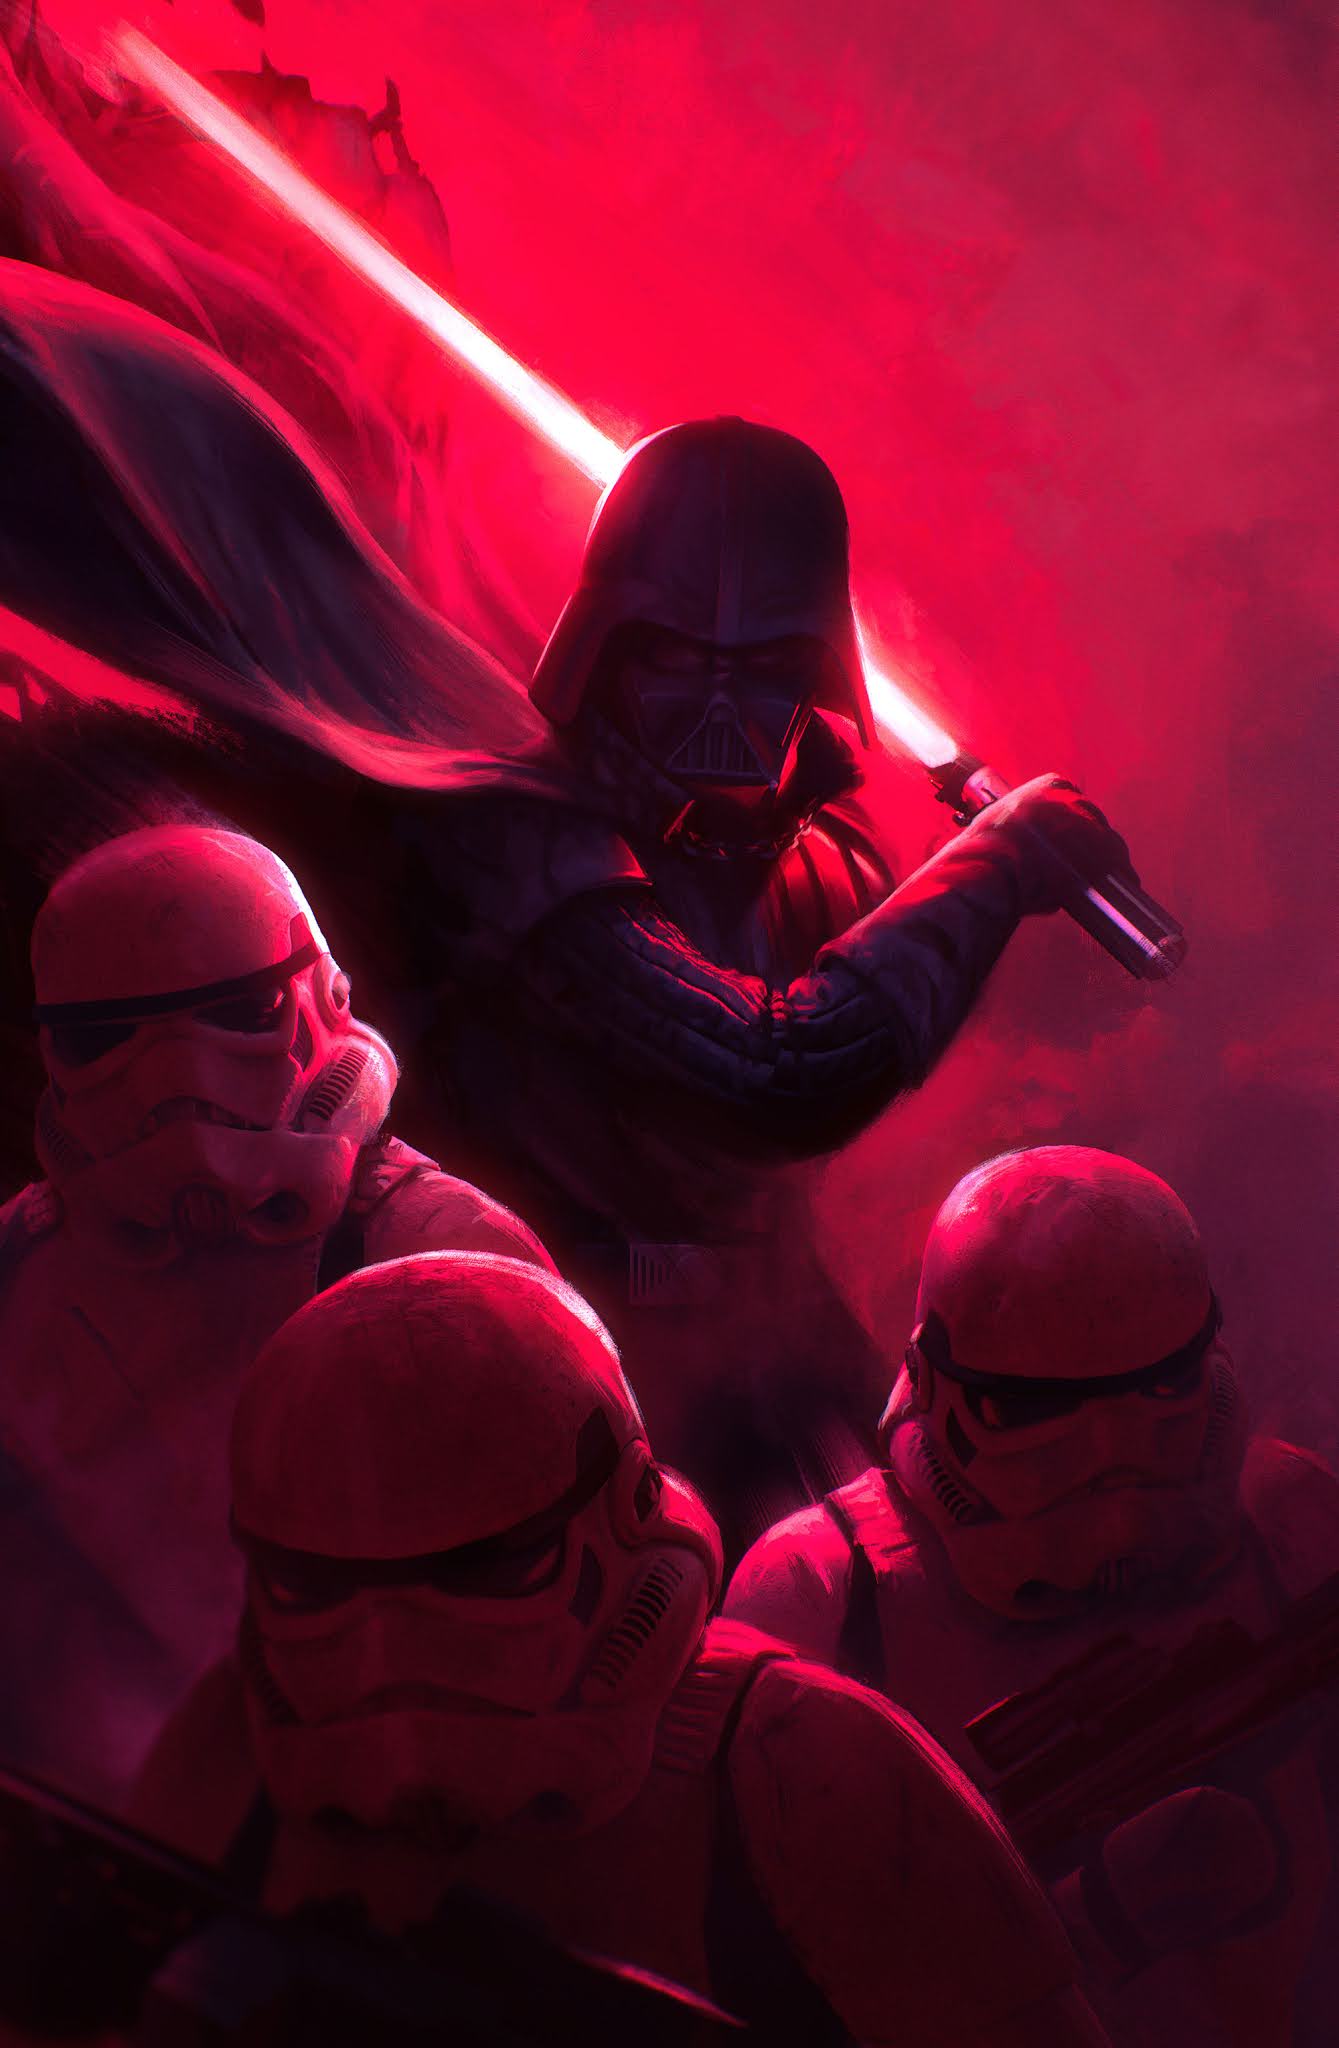 Darth Vader Wallpapers  Top 50 Best Darth Vader Wallpapers  HQ 